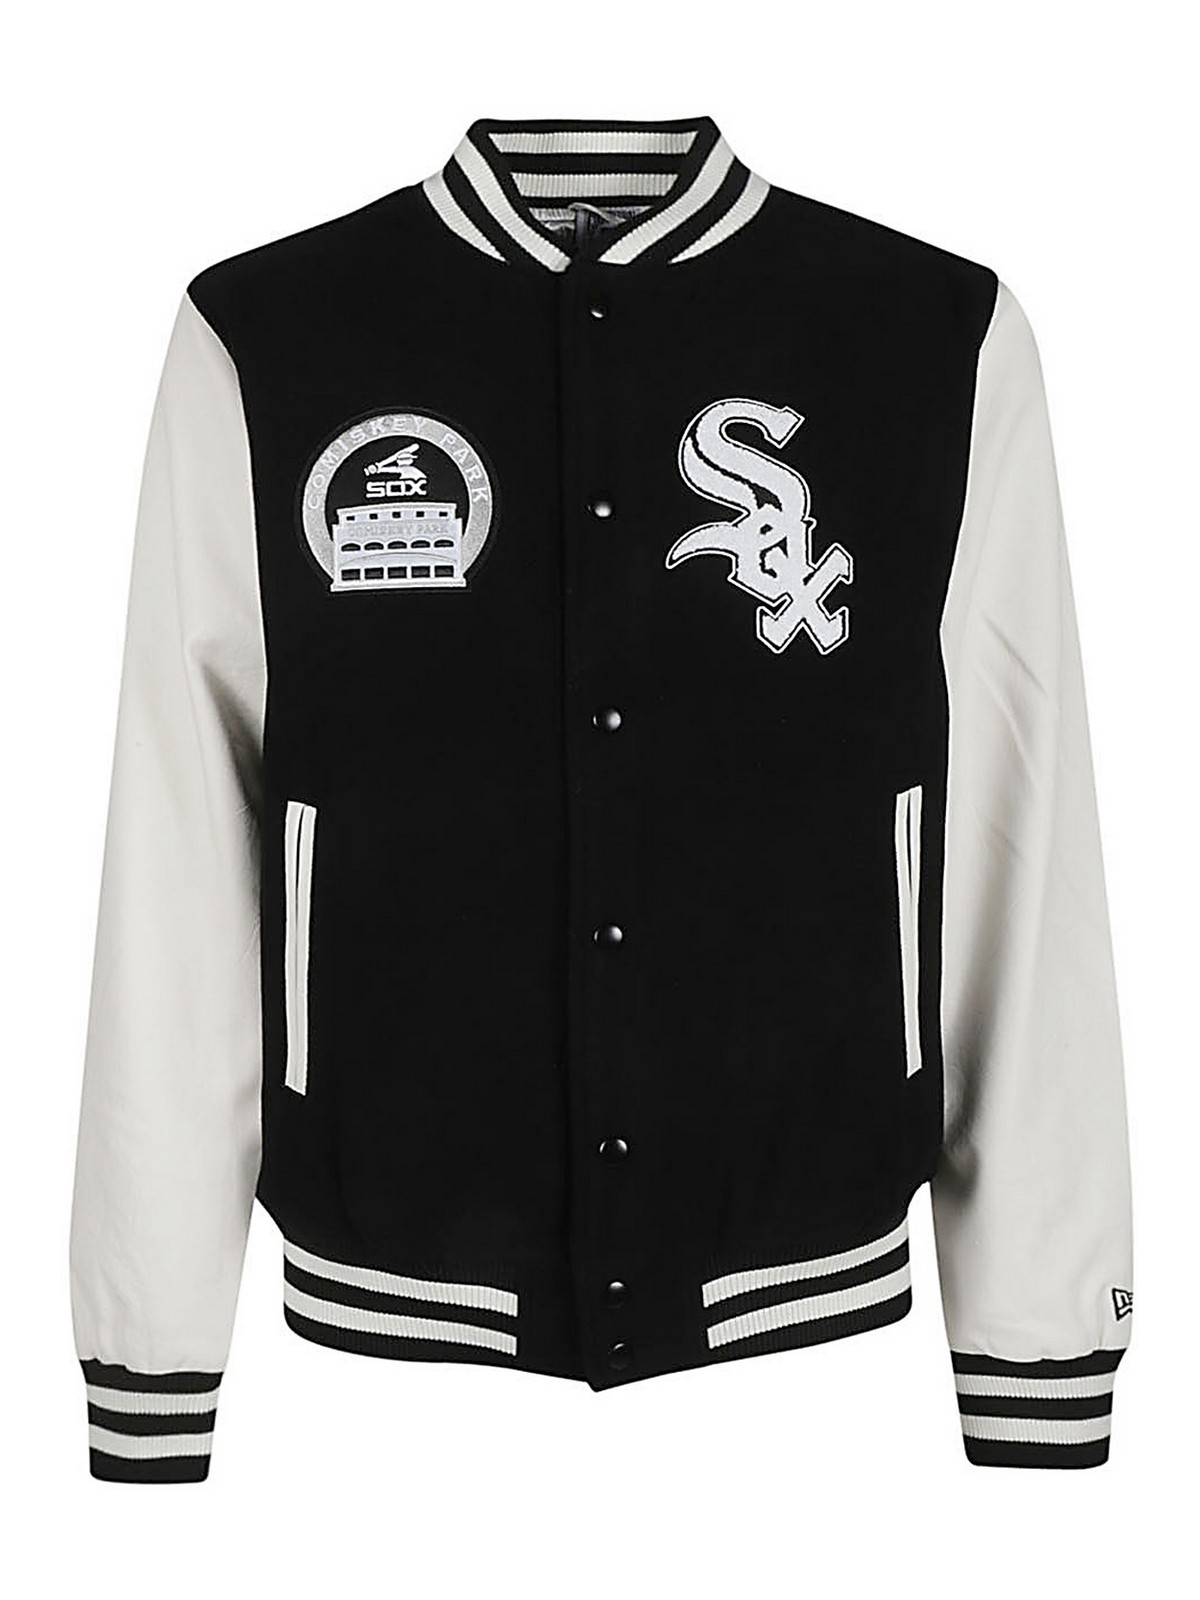 New Era Chicago White Sox heritage varsity jacket in black